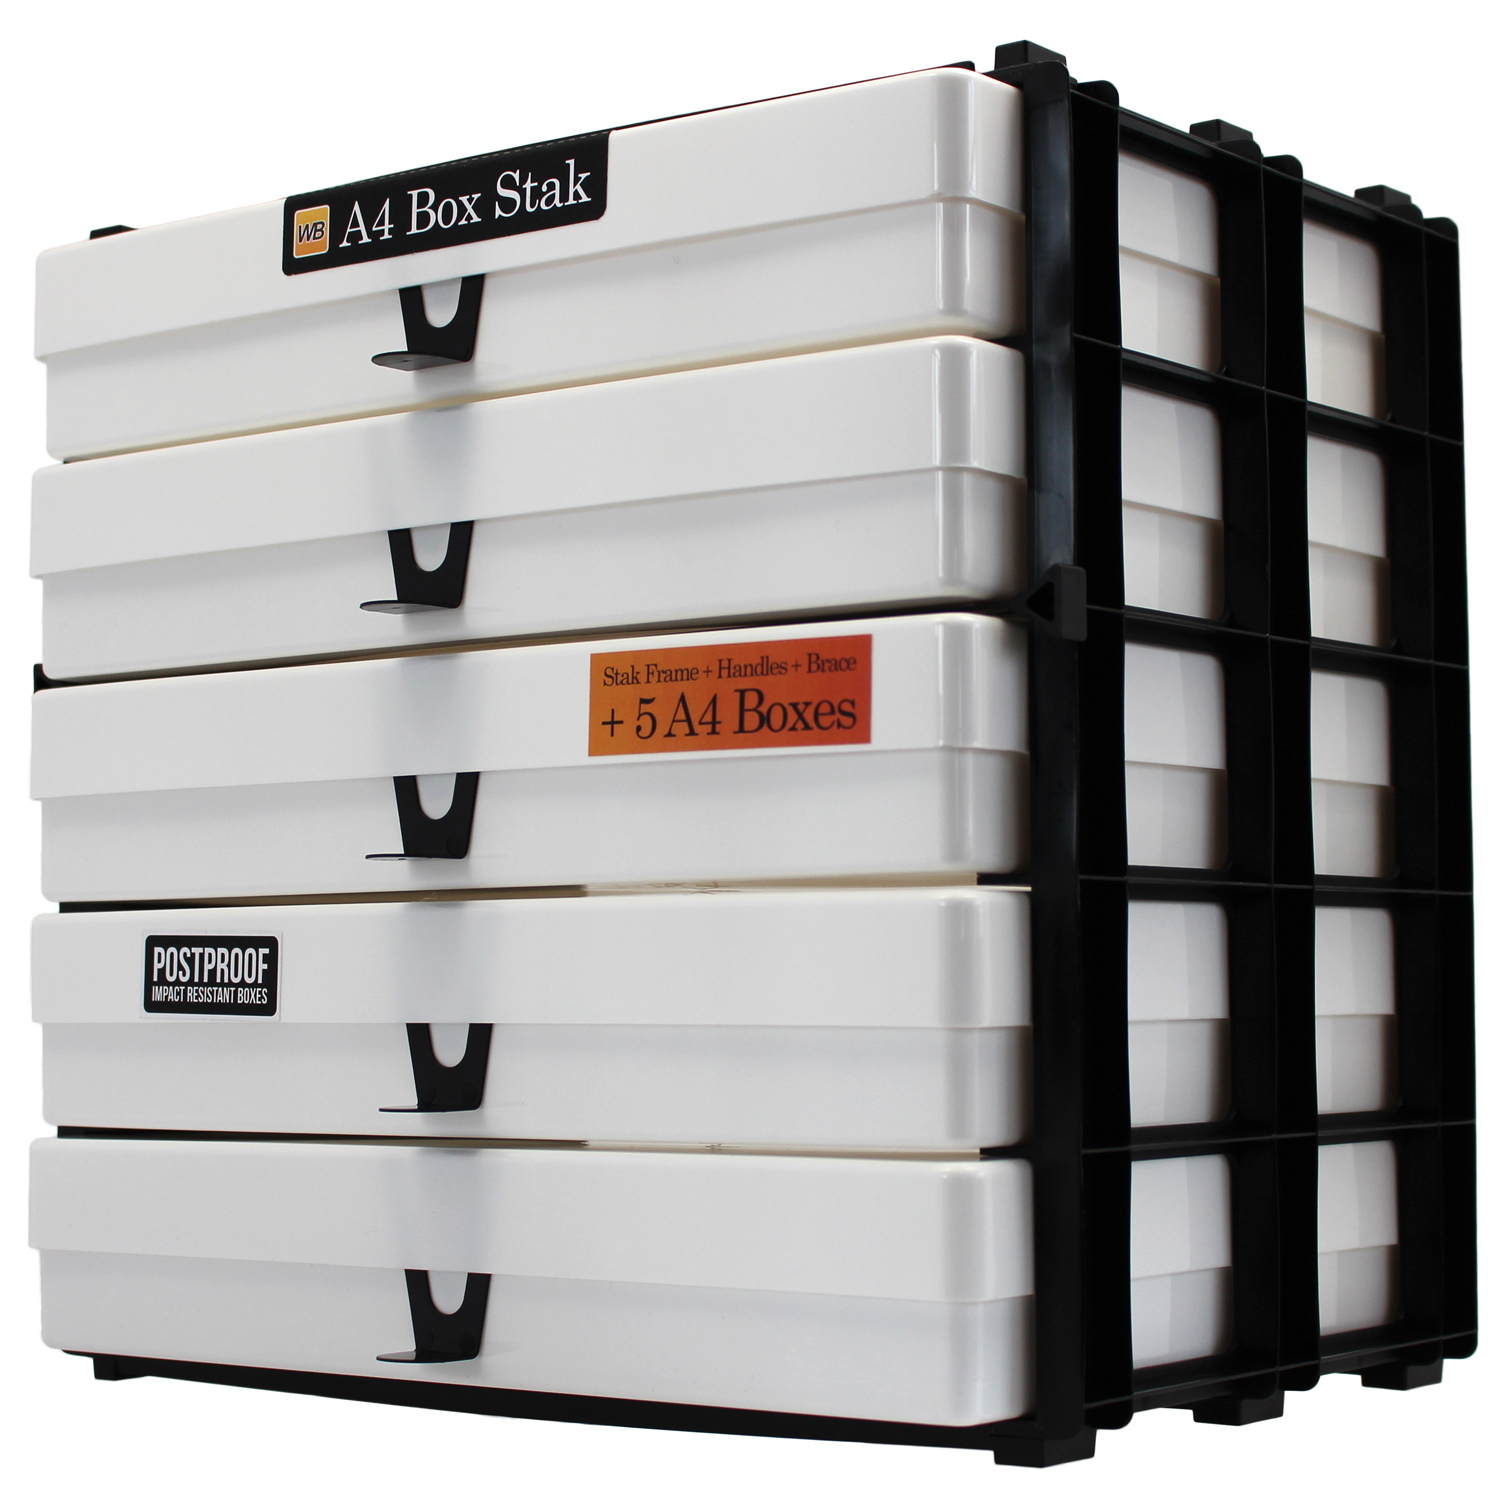 A4 Box Stak Craft Storage Unit Suppliers UK